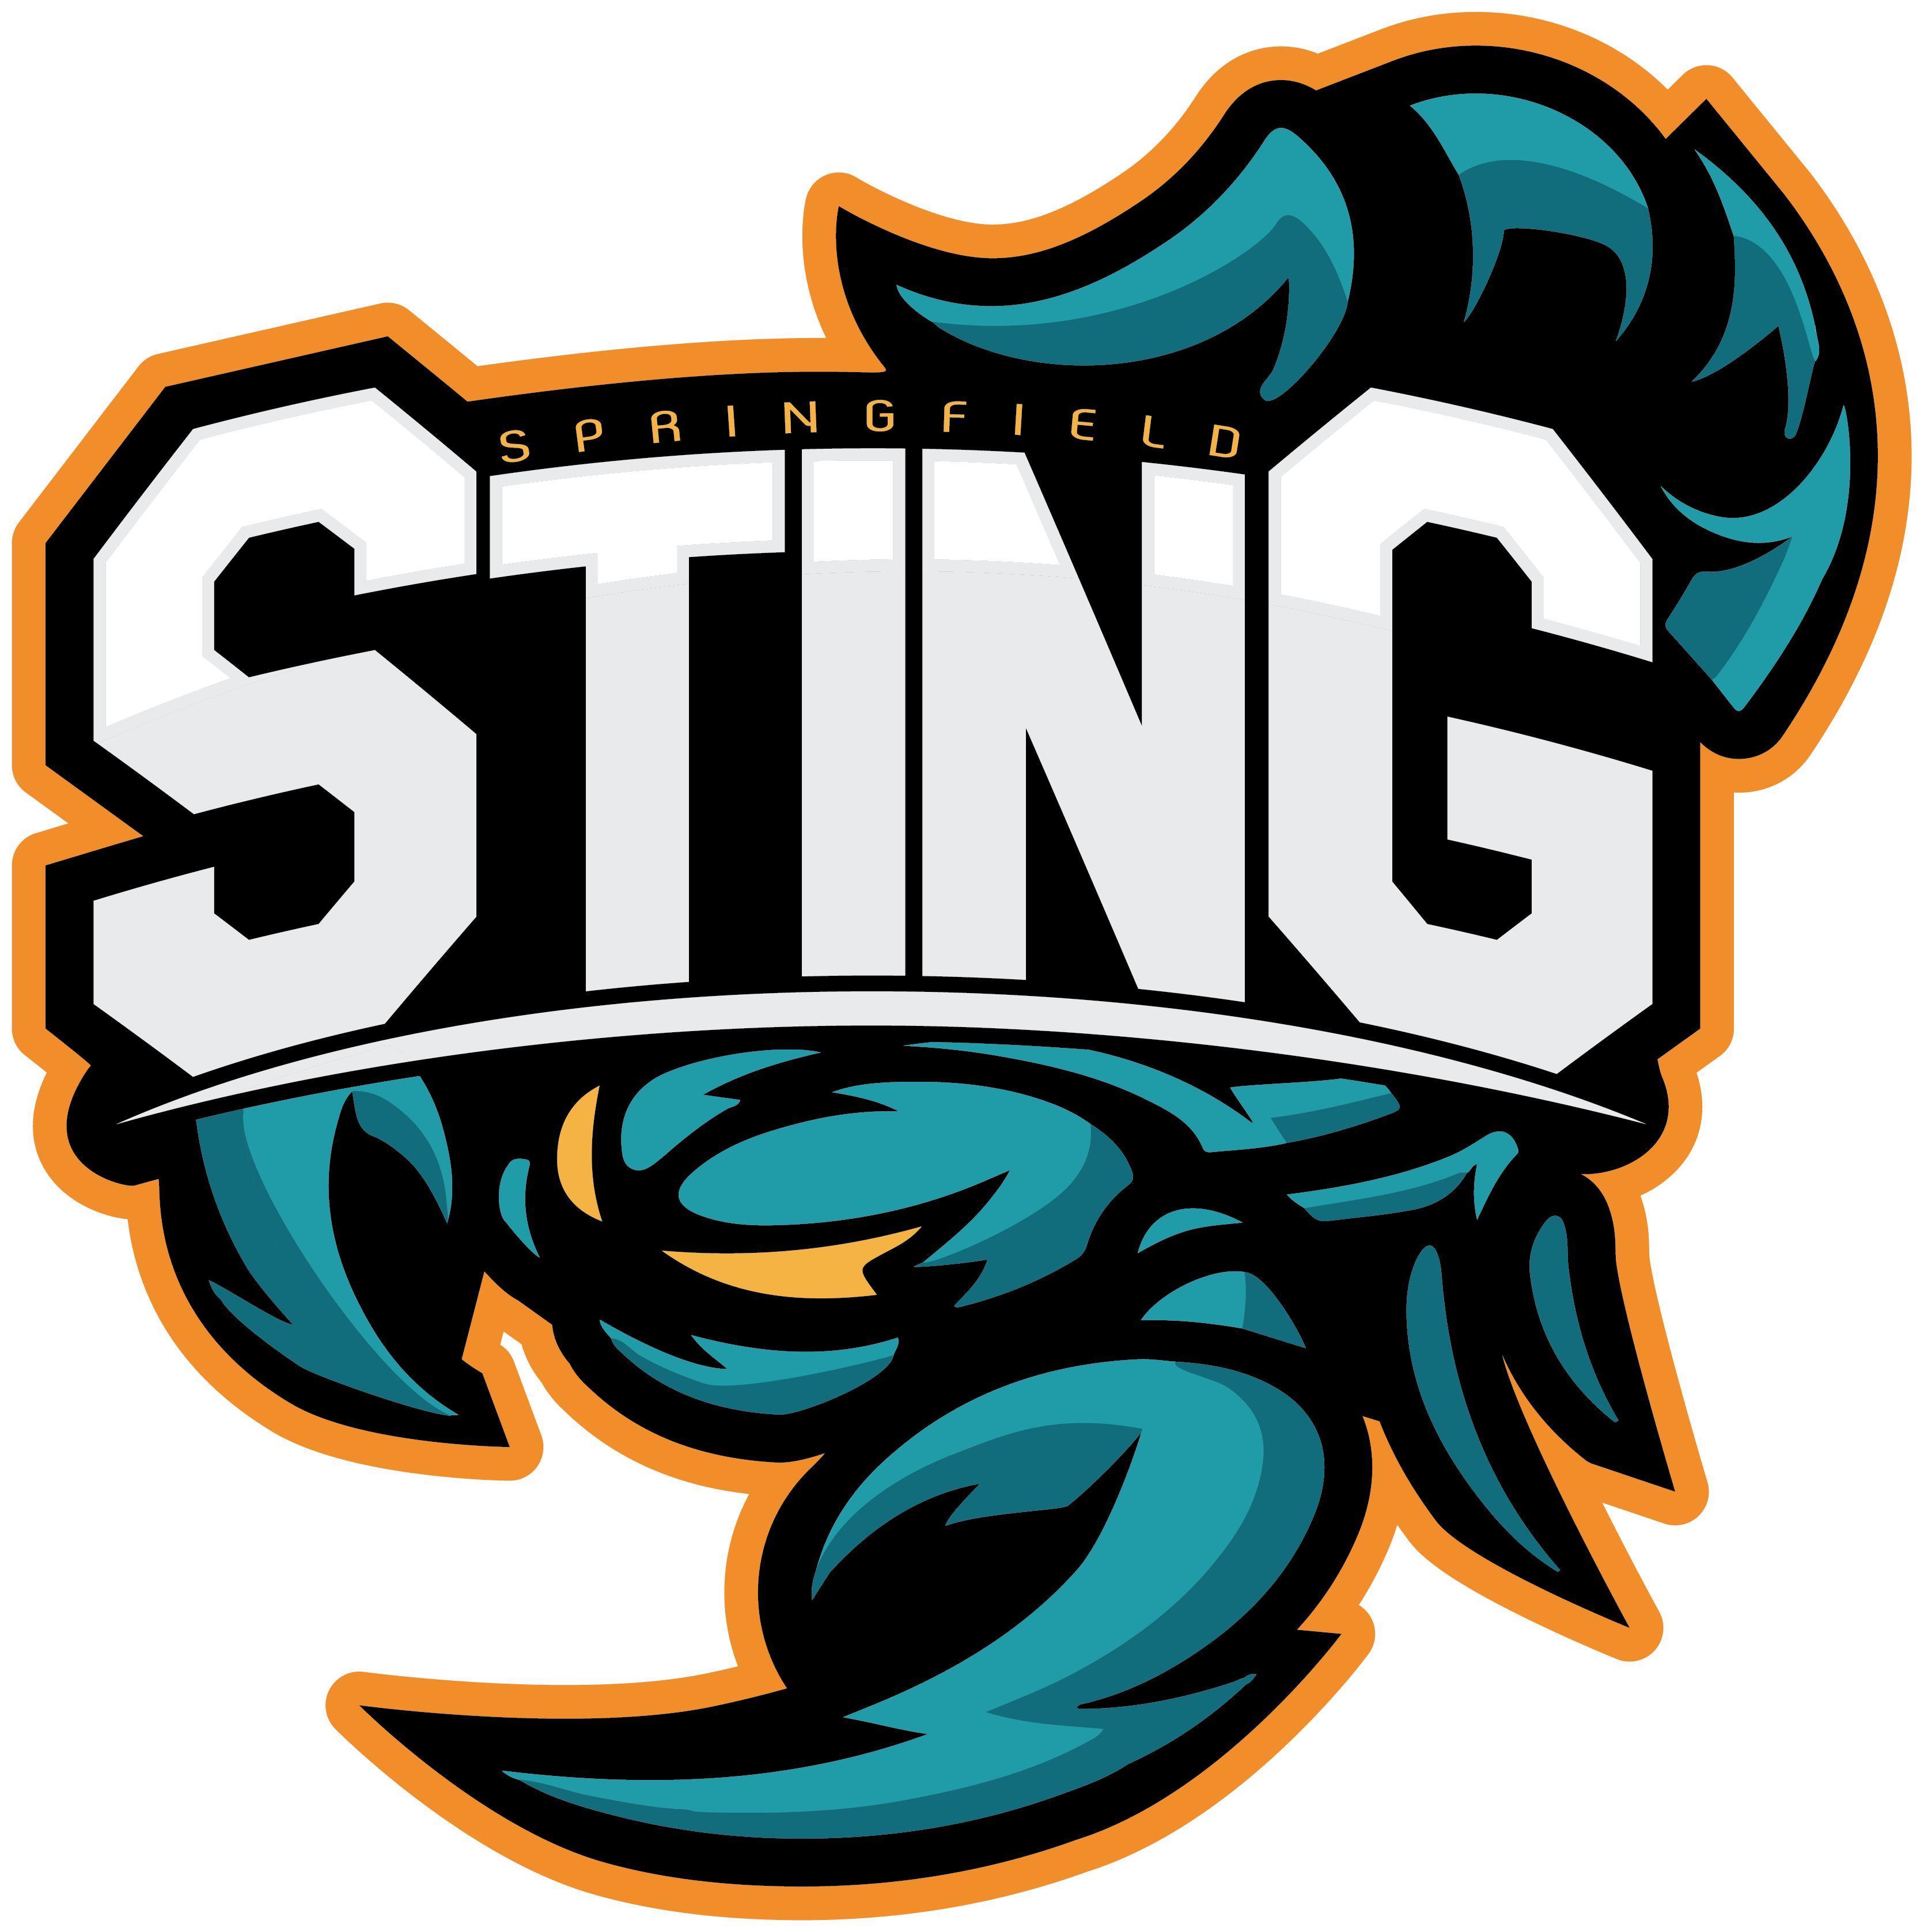 New Basketball Logo - Sting to attend New Jersey Pro Basketball Combine | Springfield Sting